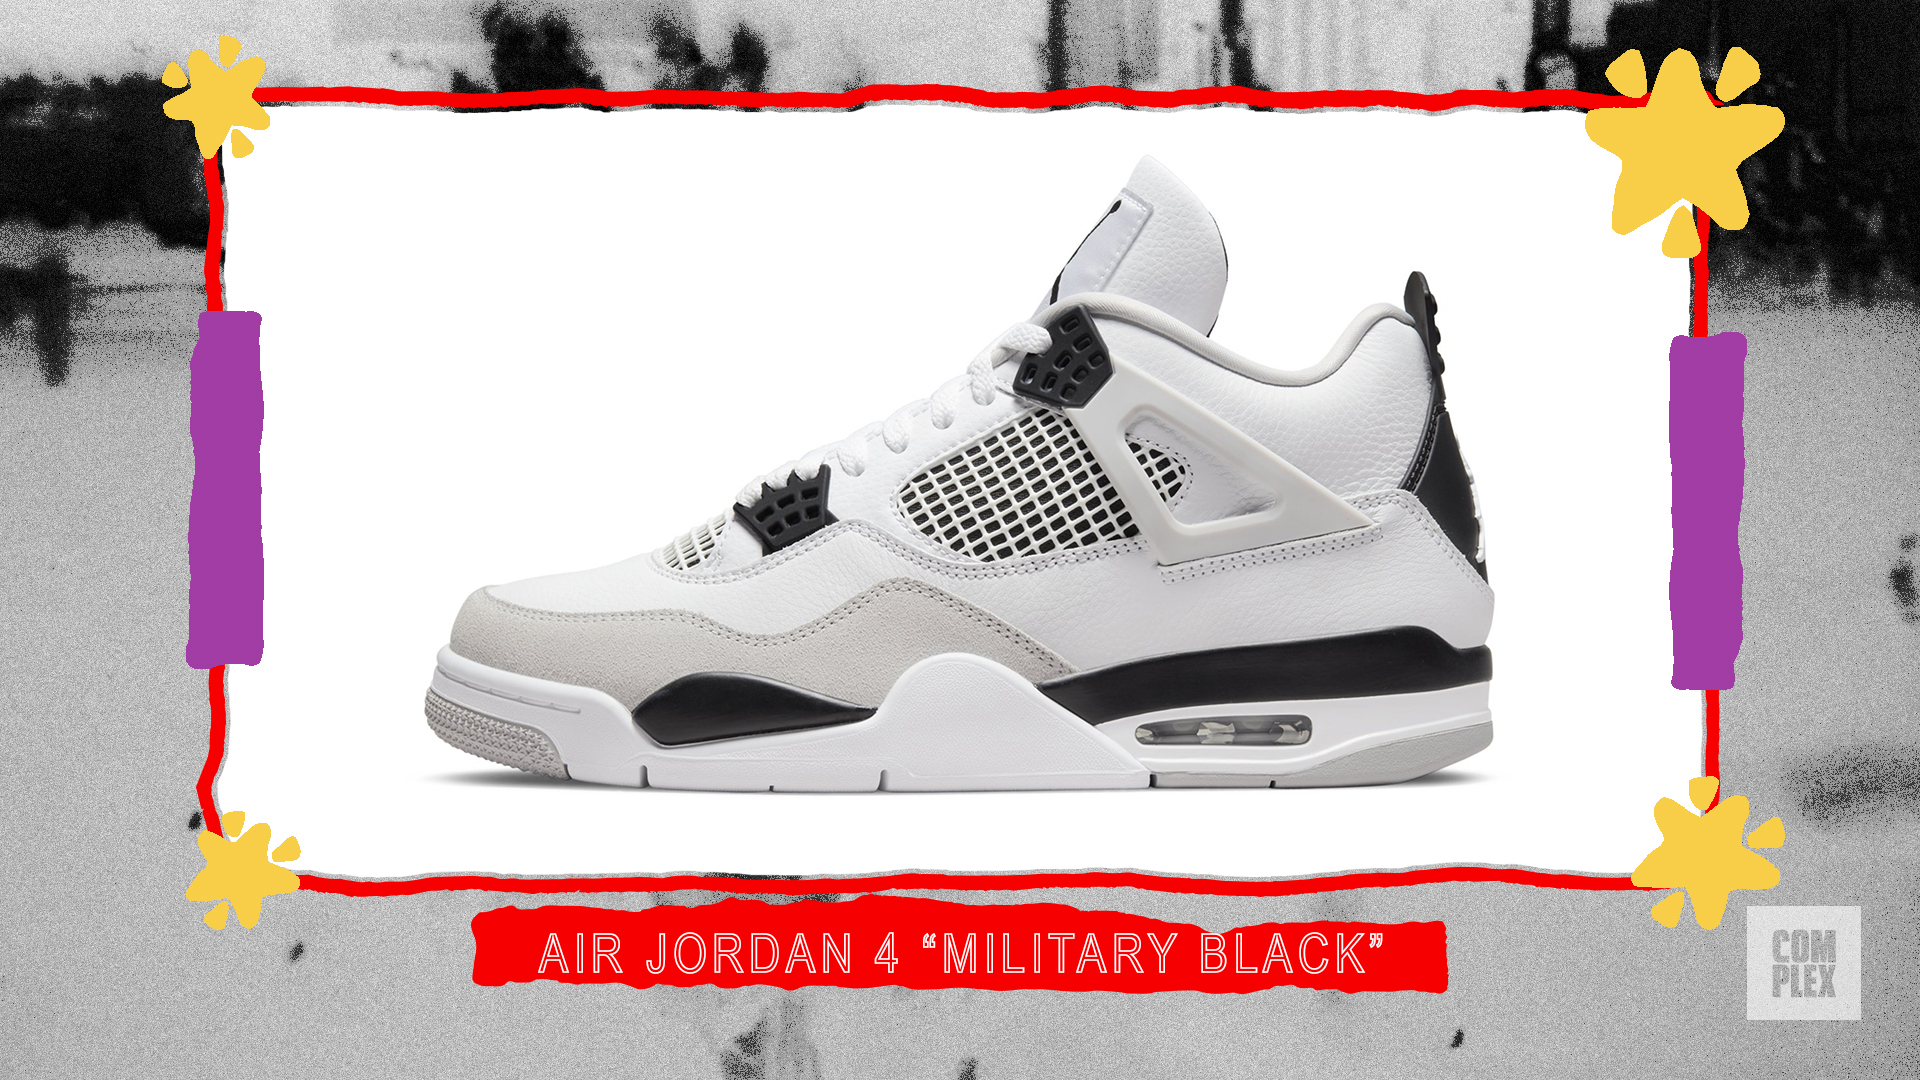 Air Jordan 4 &#x27; Military Black&#x27;